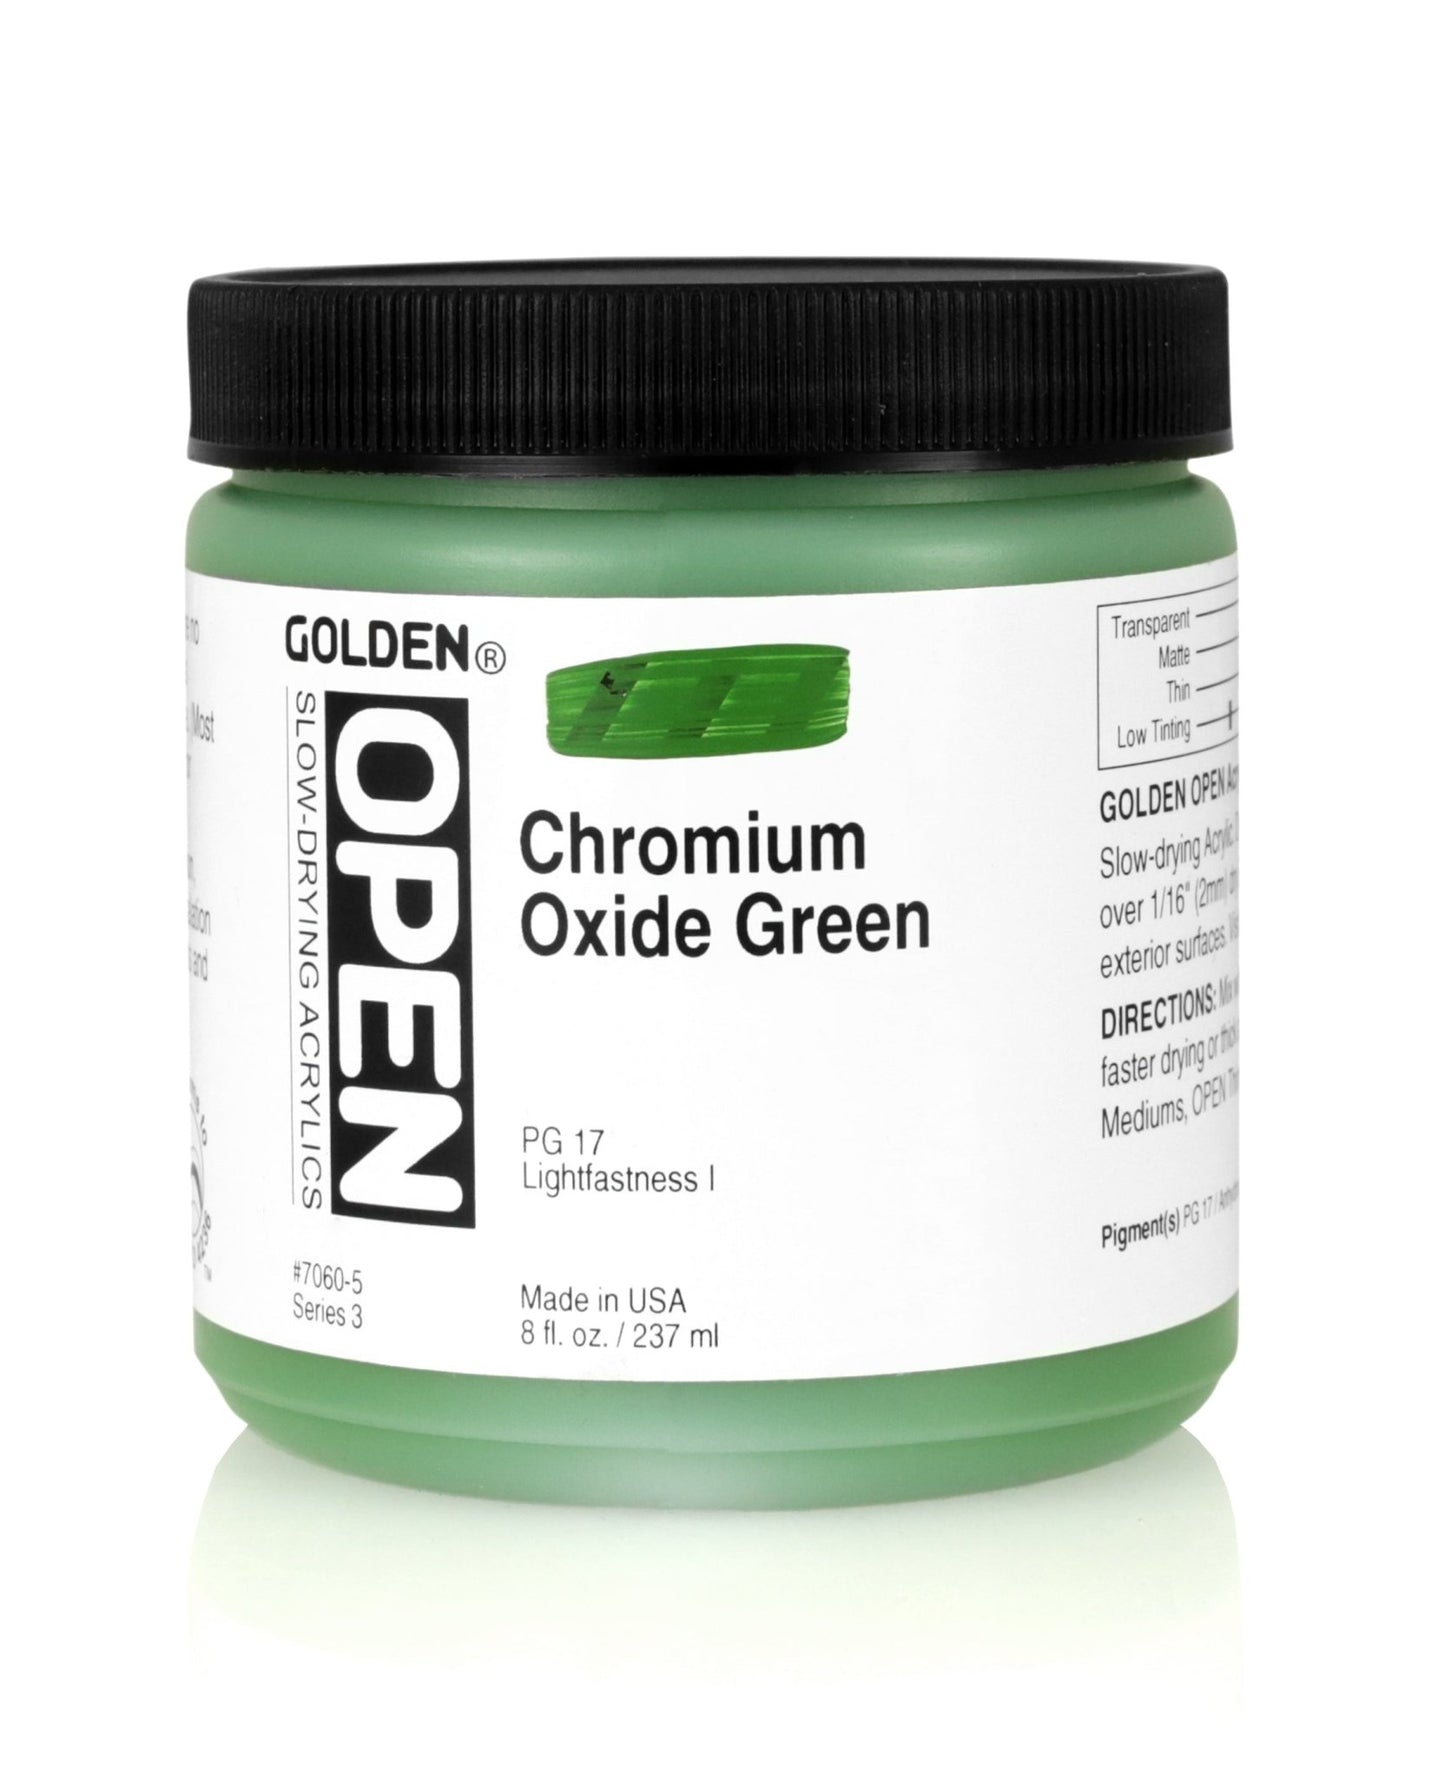 Golden Open Acrylics 237ml Chromium Green Oxide - theartshop.com.au